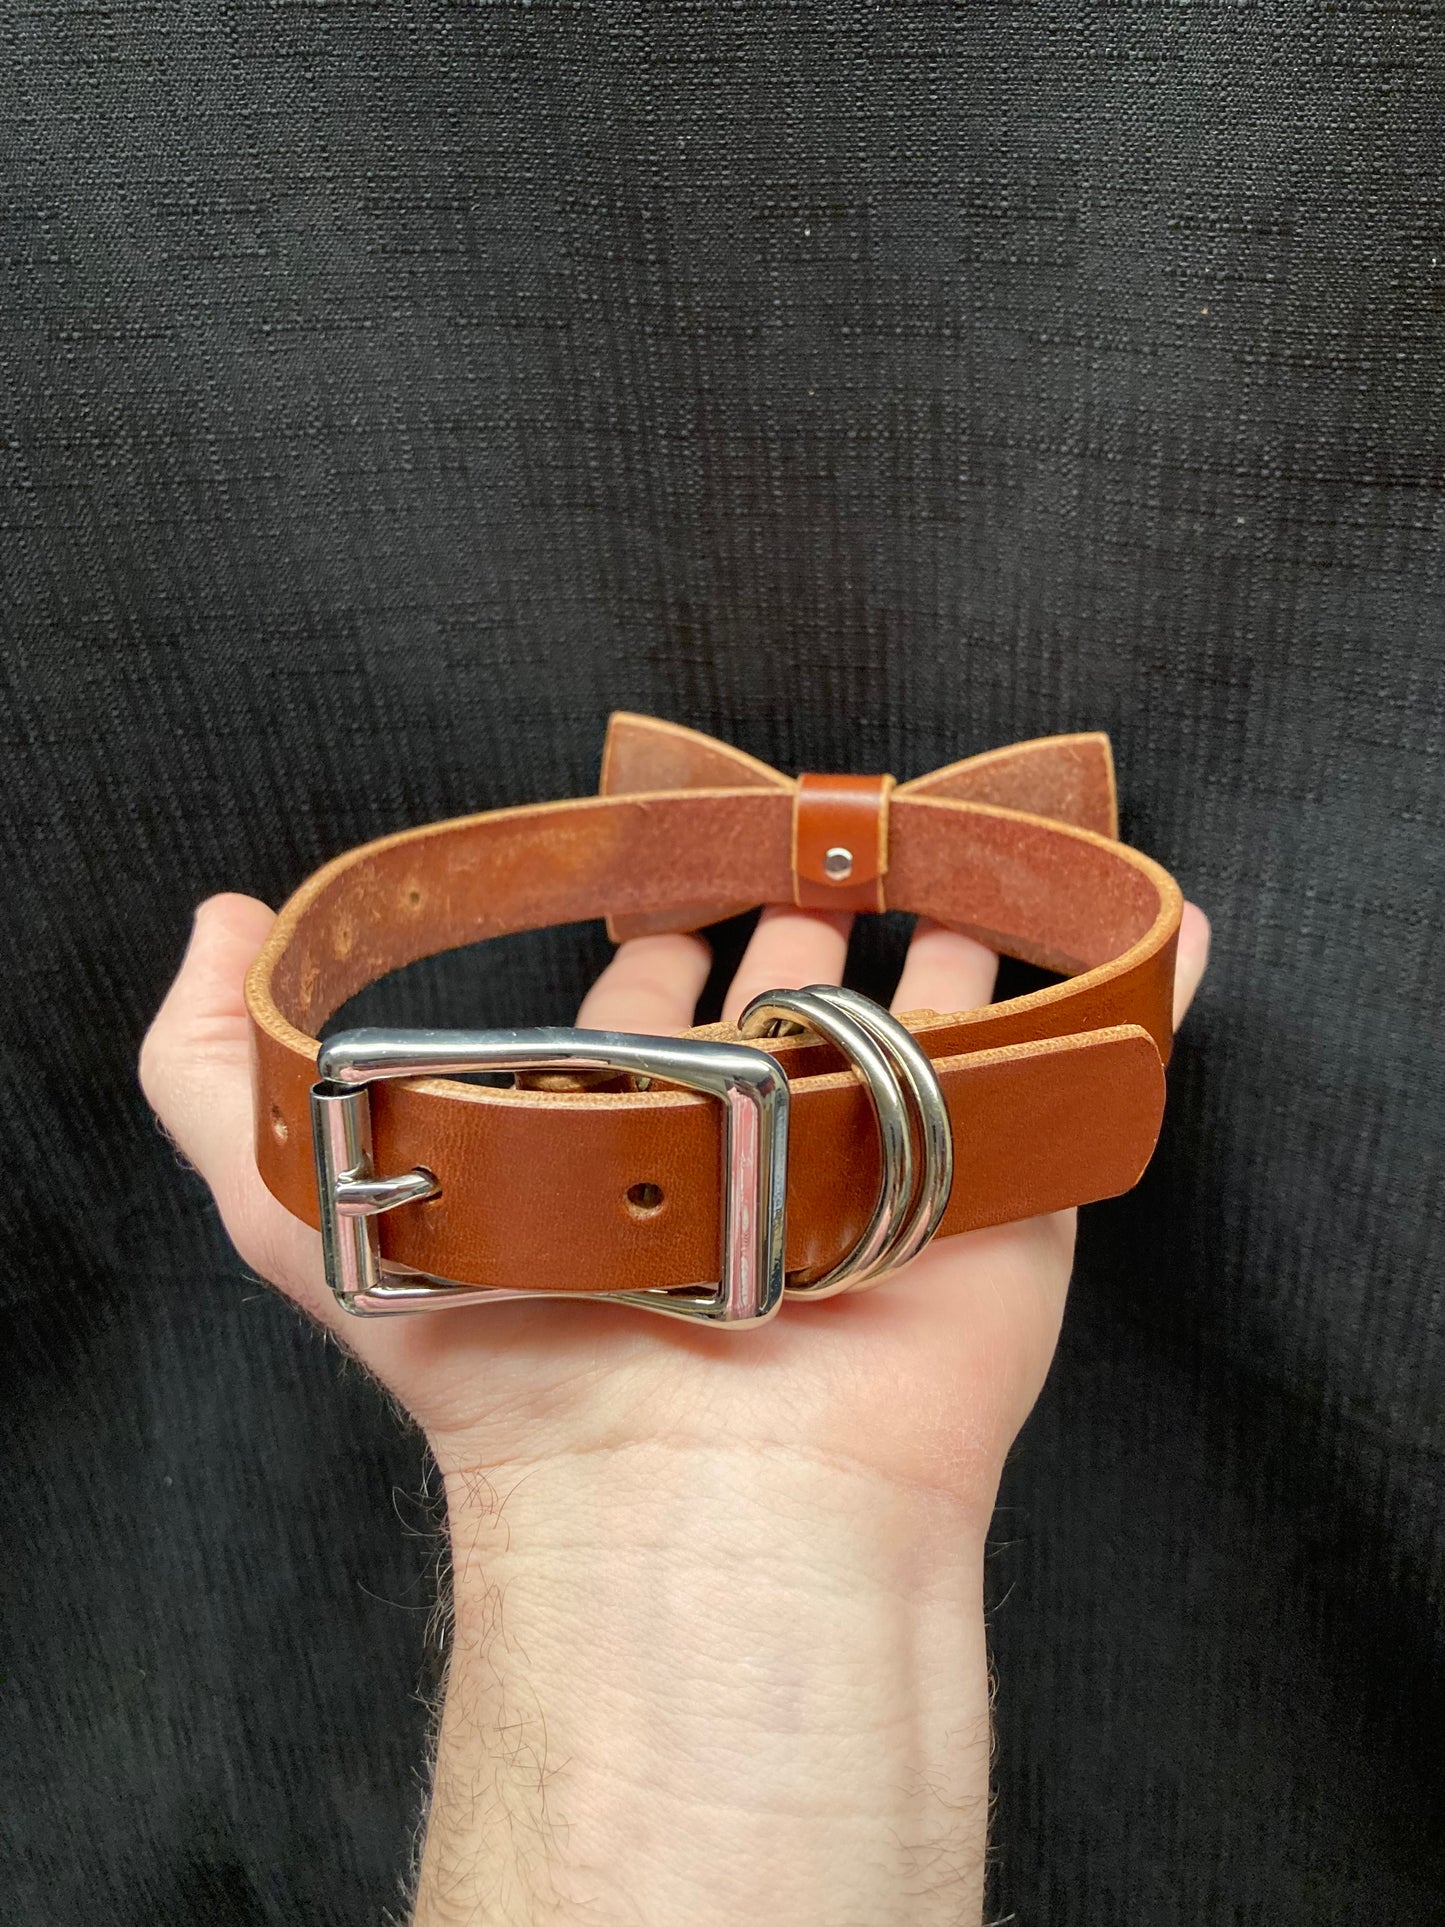 Medium Brown Dog Collar with Bowtie